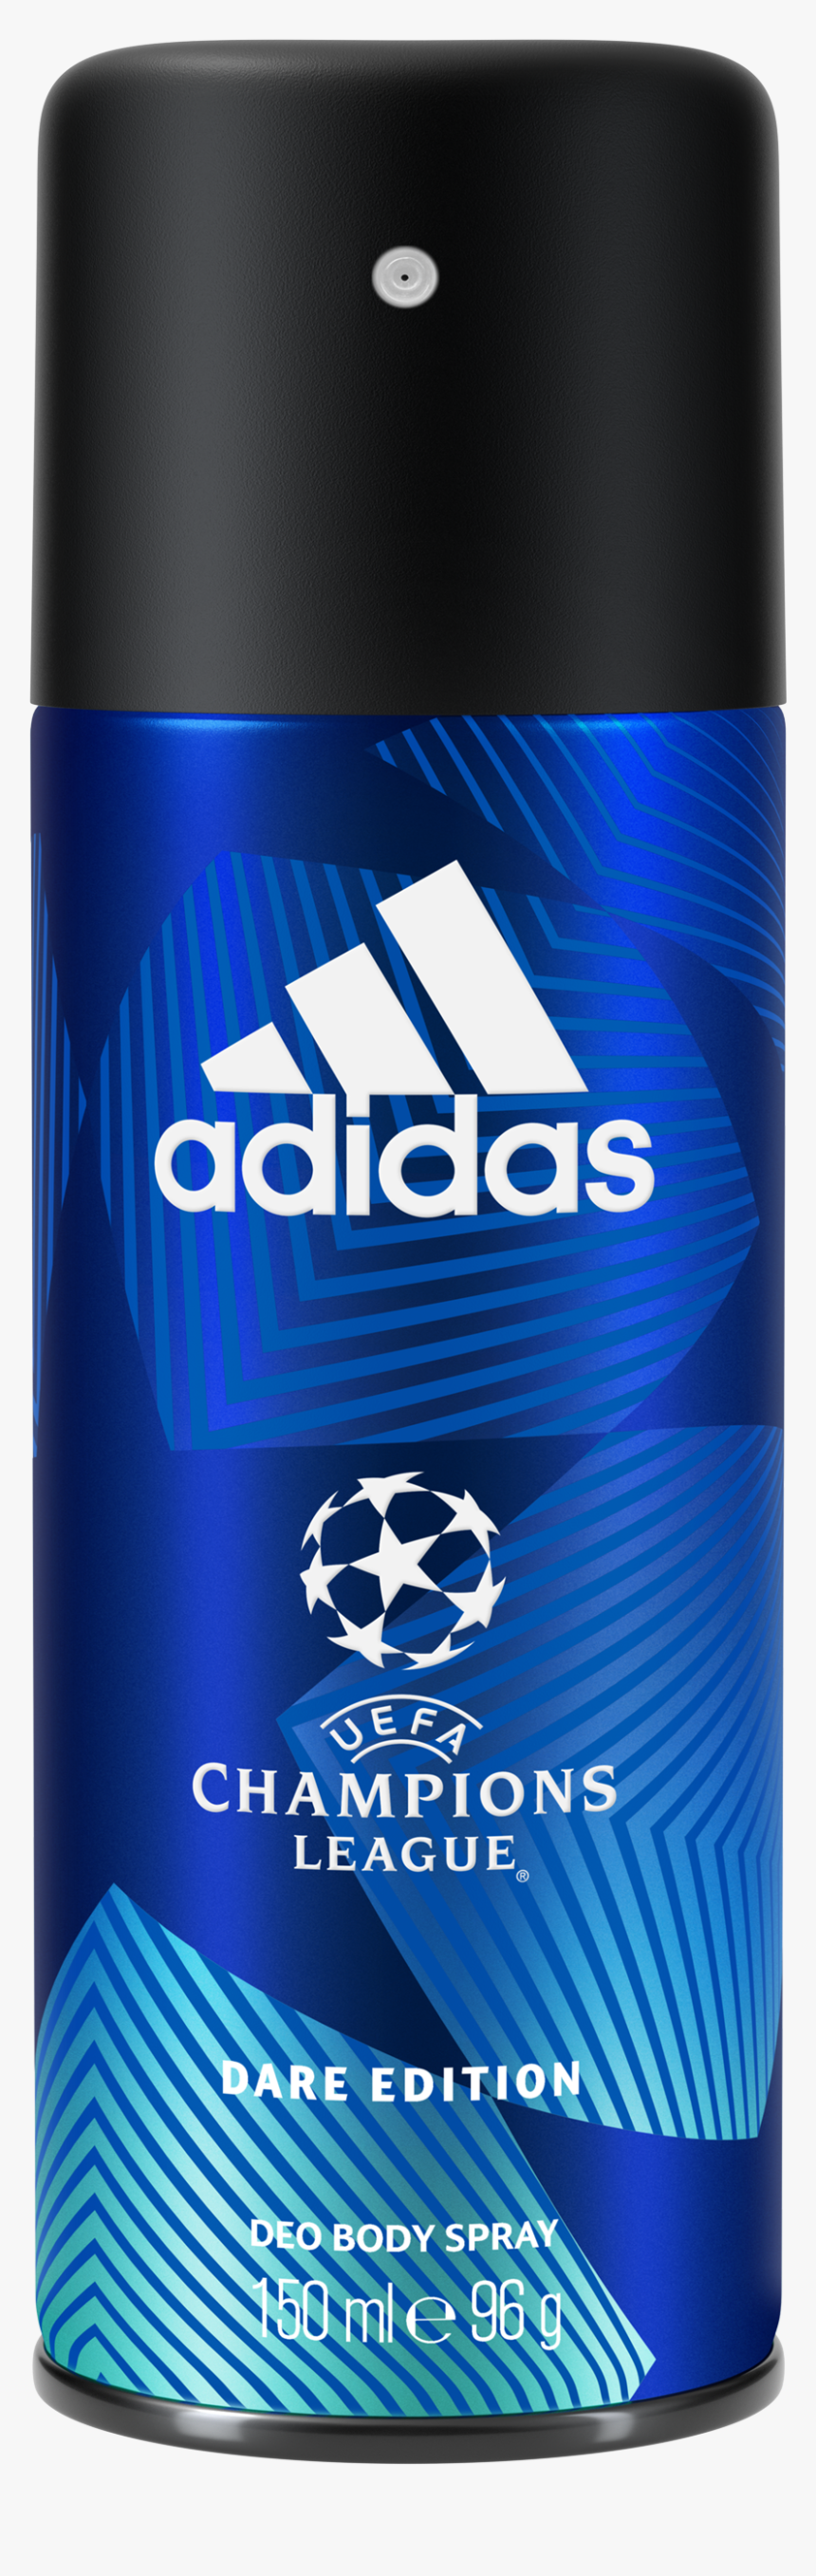 Uefa Champions League Dare Edition Deodorant Body Spray - Adidas Dare Deo, HD Png Download, Free Download